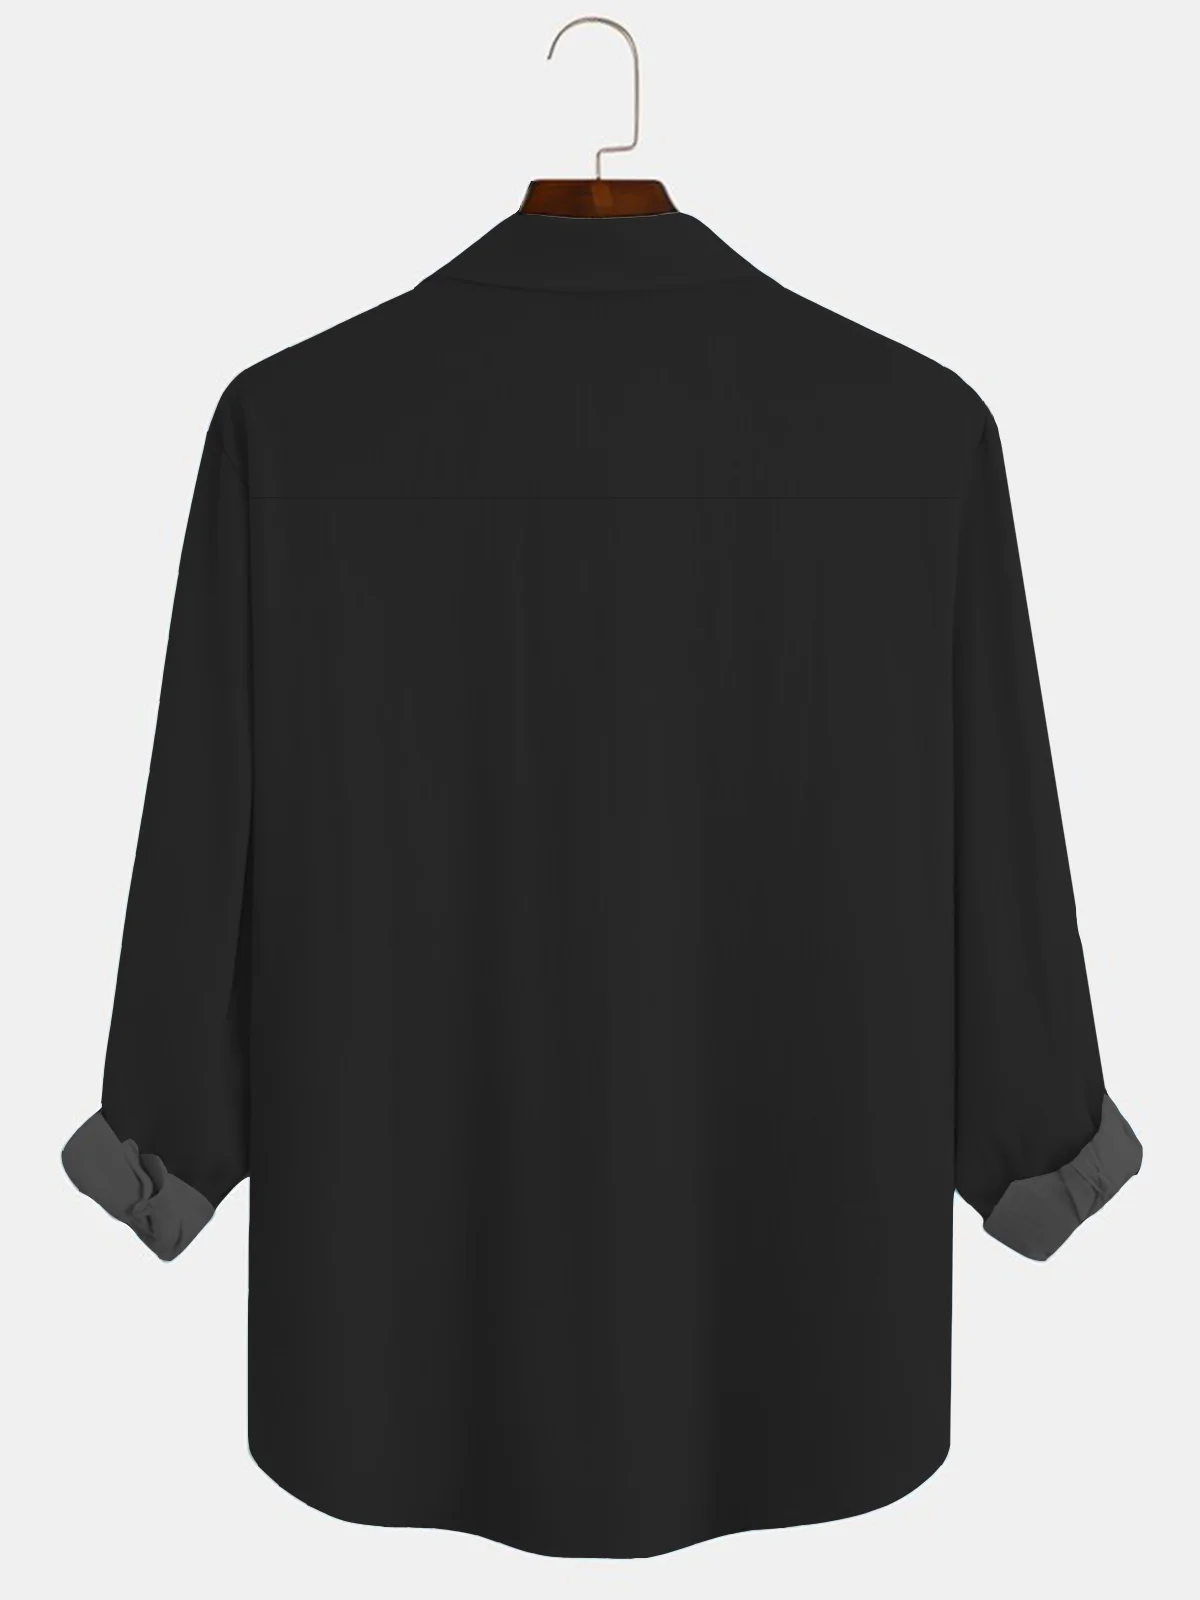 Royaura Gradient Vintage Print Men's Button Pocket Long Sleeve Shirt